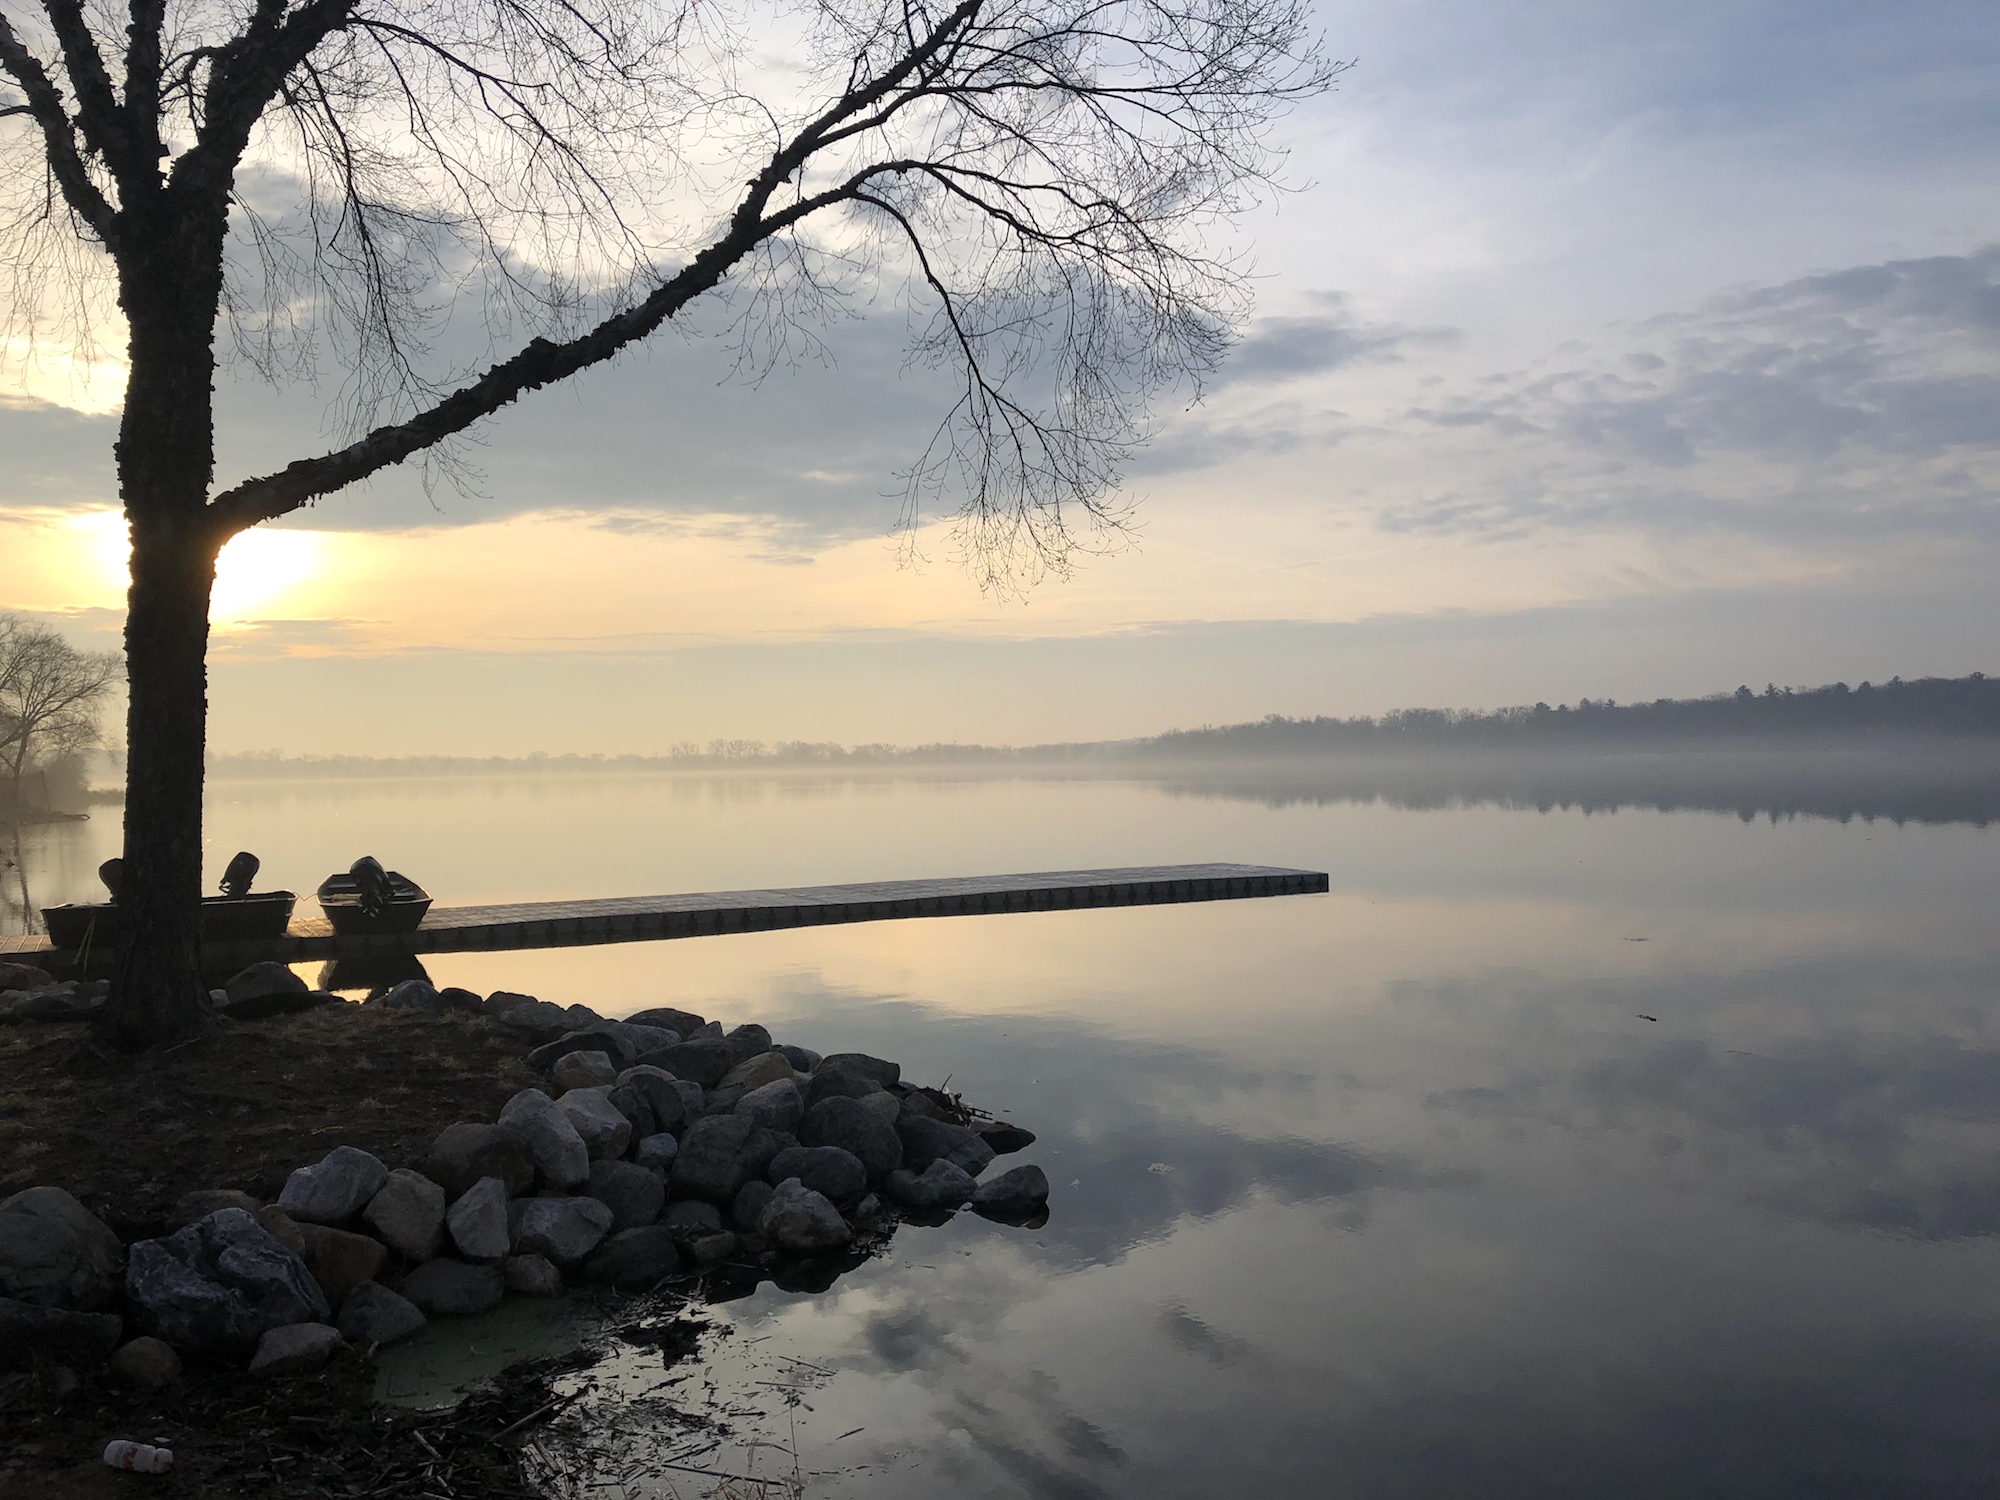 Lake Wingra on April 7, 2019.